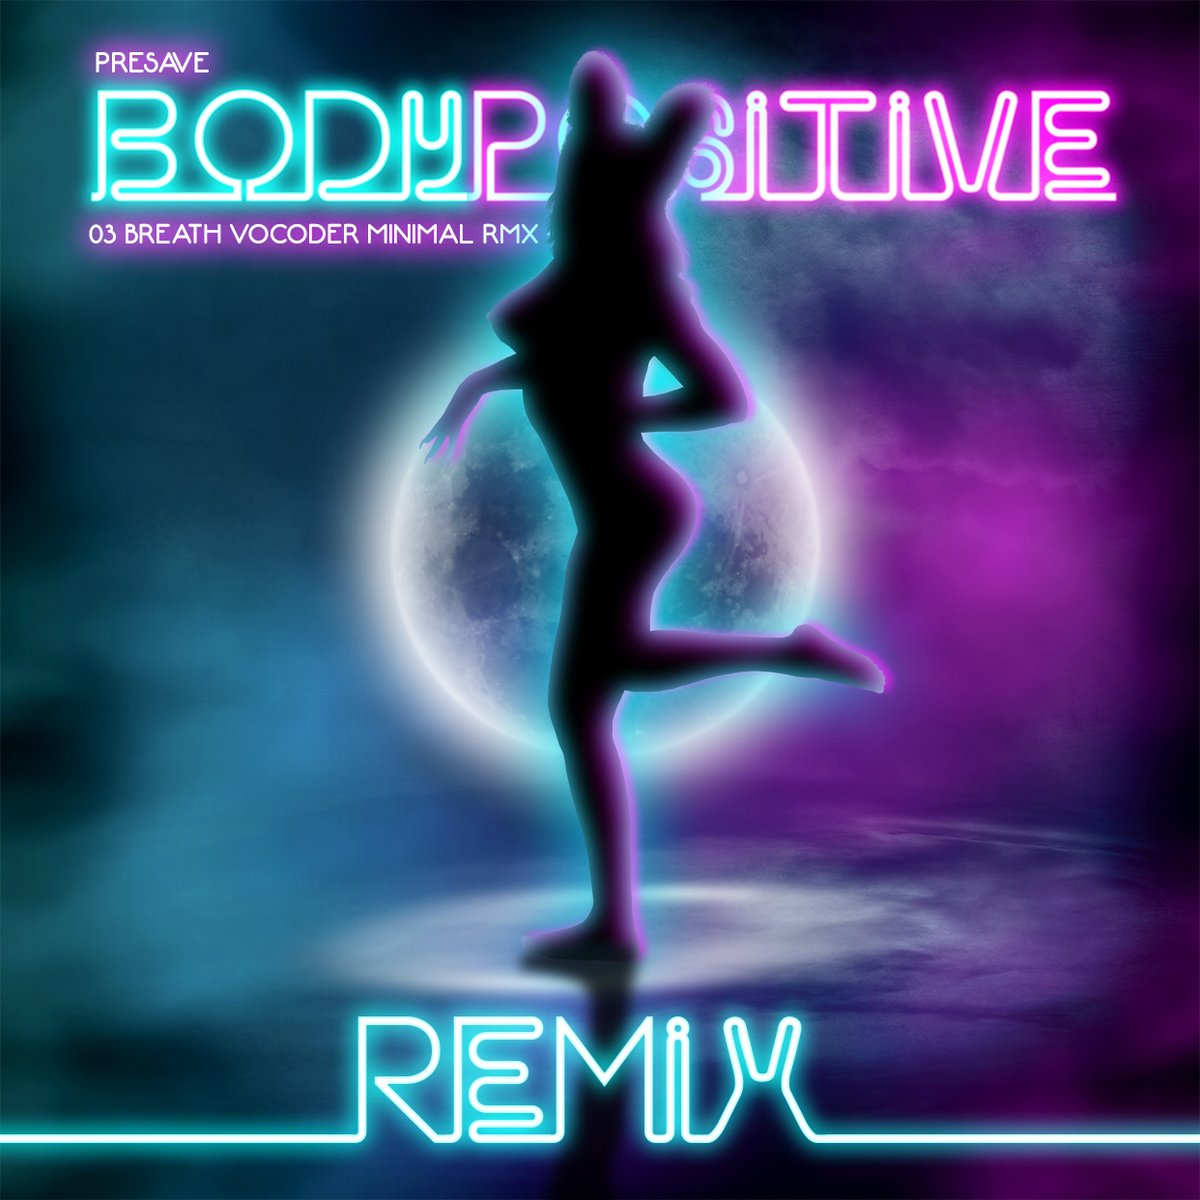 test Twitter Media - 🎧https://t.co/5SPh8VPm36
💿#presave #new #remix #single #track #spotify #applemusic
💪#bodypositive #breath #vocoder #minimal #rmx
🎹#synthwave #cinematic #ambient #instrumental #electronicmusic #soundtrack #retrowave #pop #music
🌹@spotify @applemusic #popart #bodypositivity https://t.co/hCYAUAYgg9